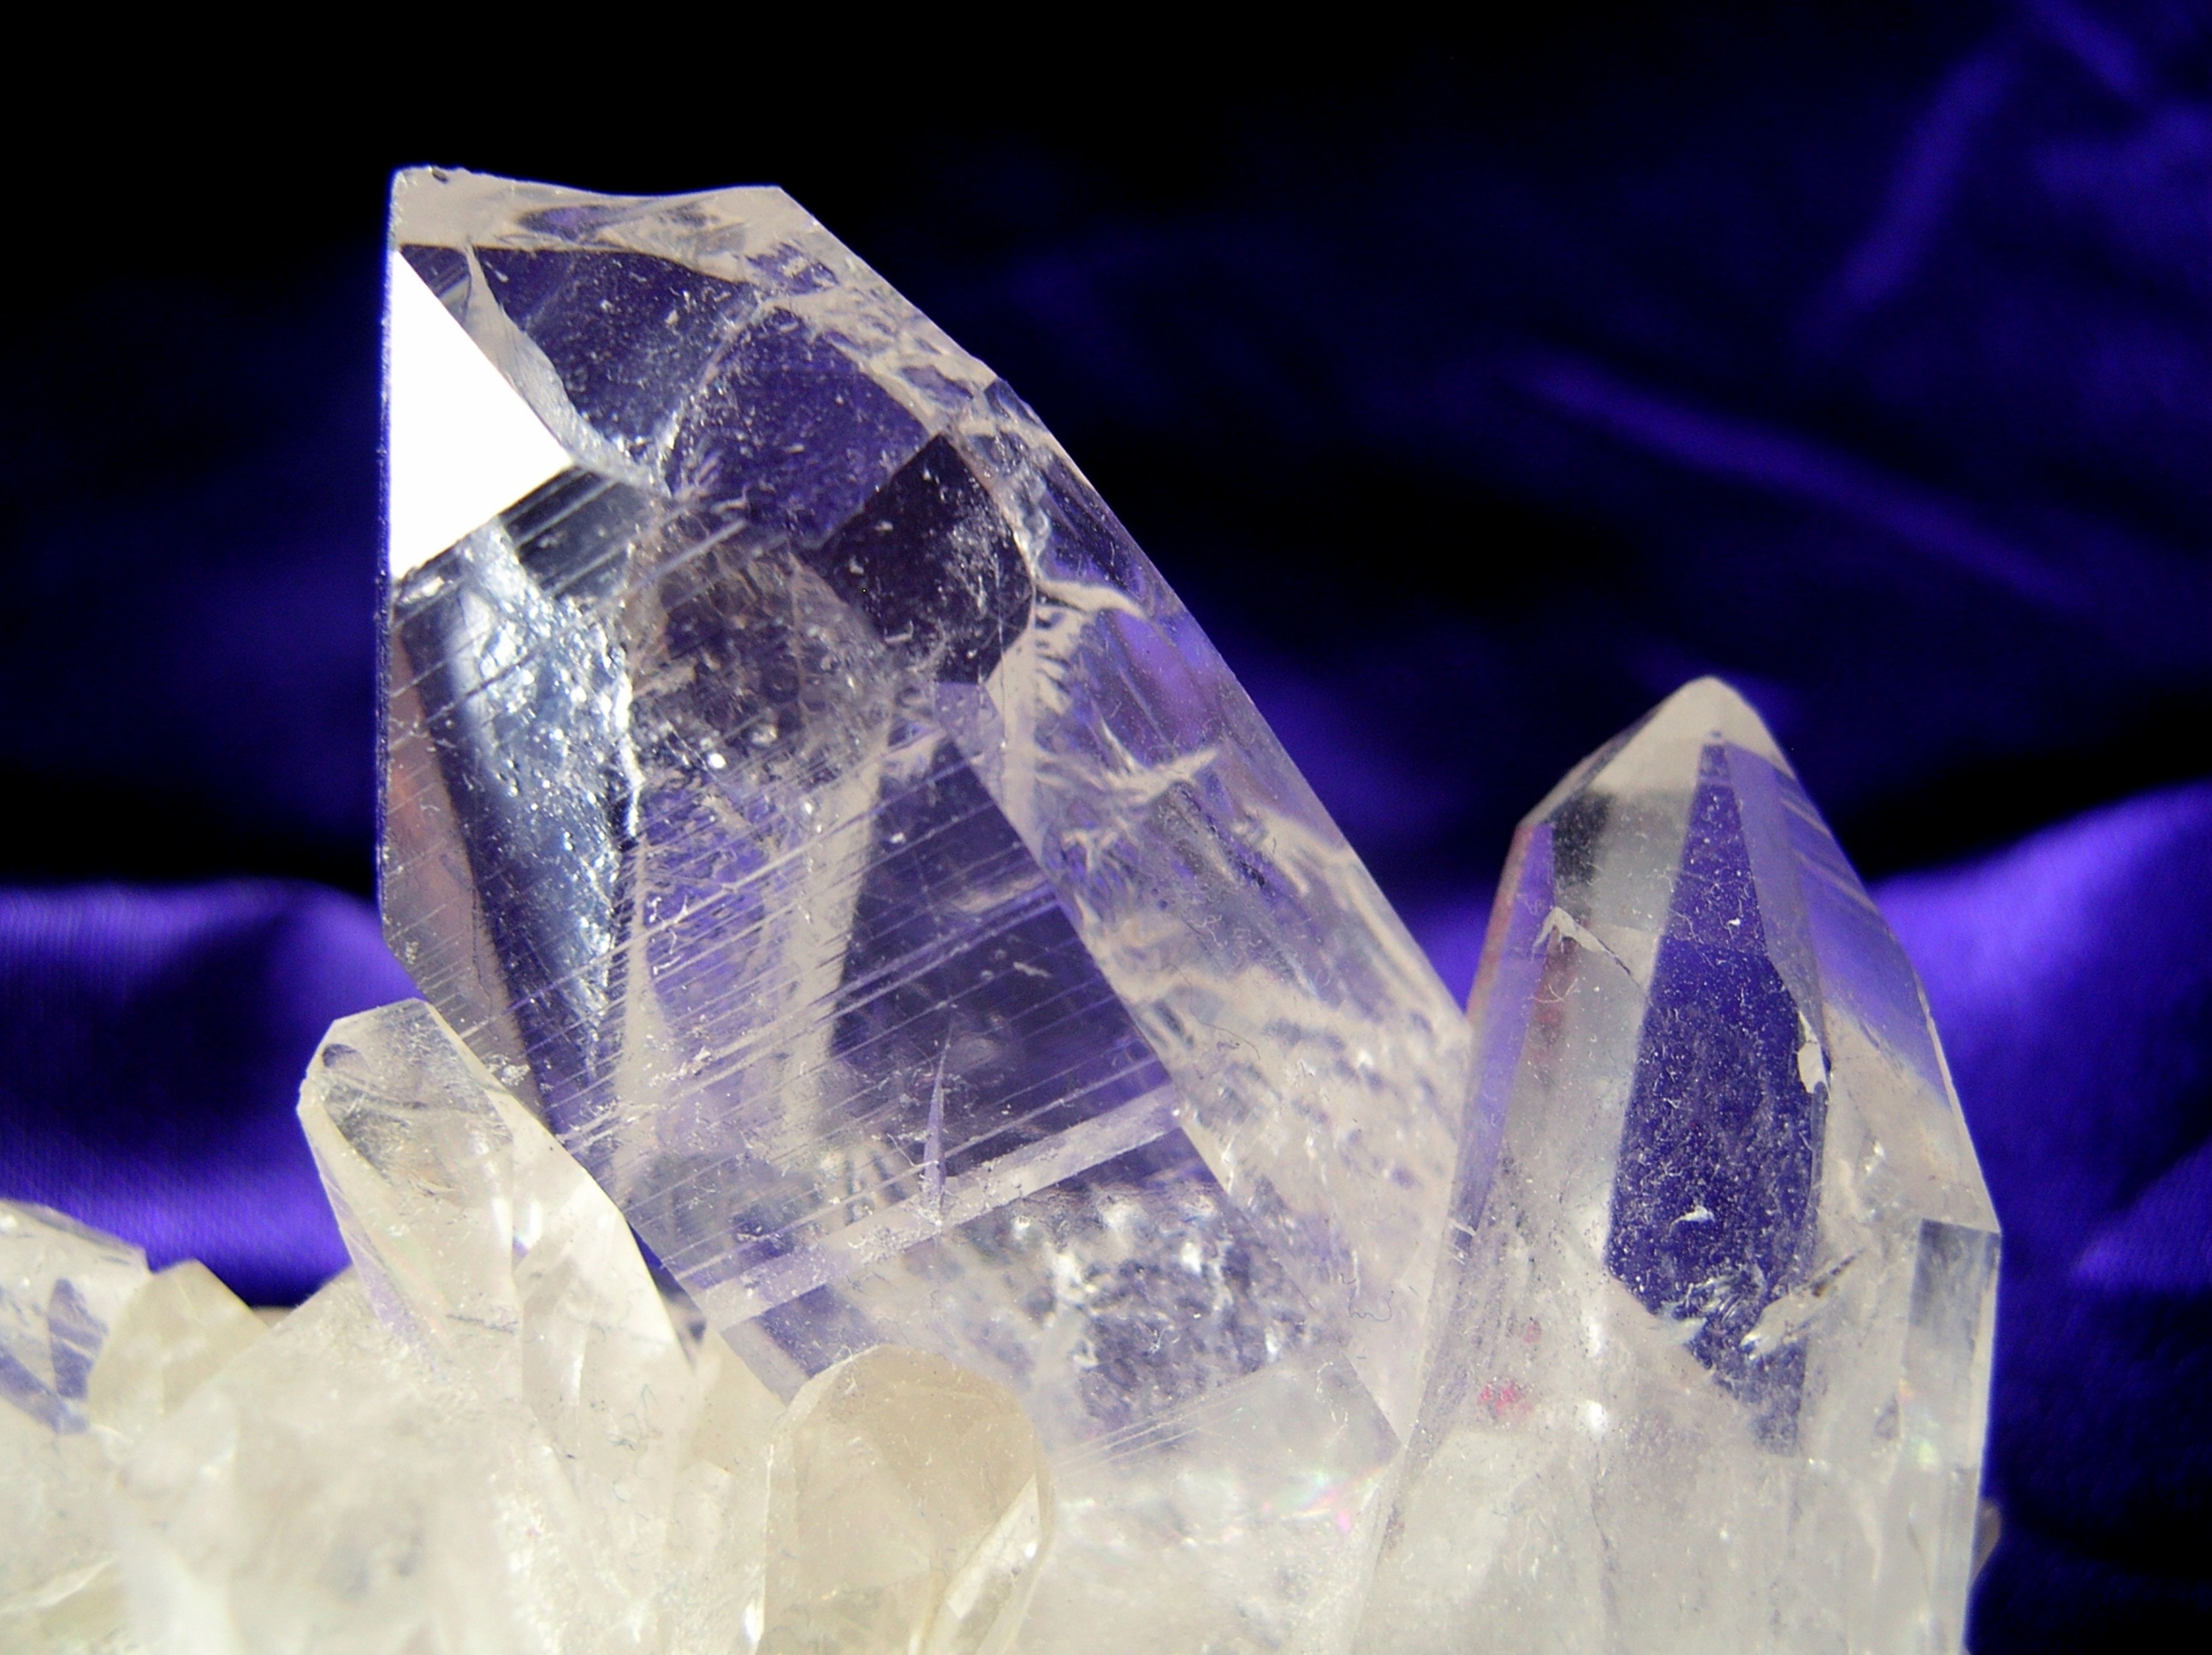 Toxic homemade crystal recipe sweeps the internet – geek insider fyi